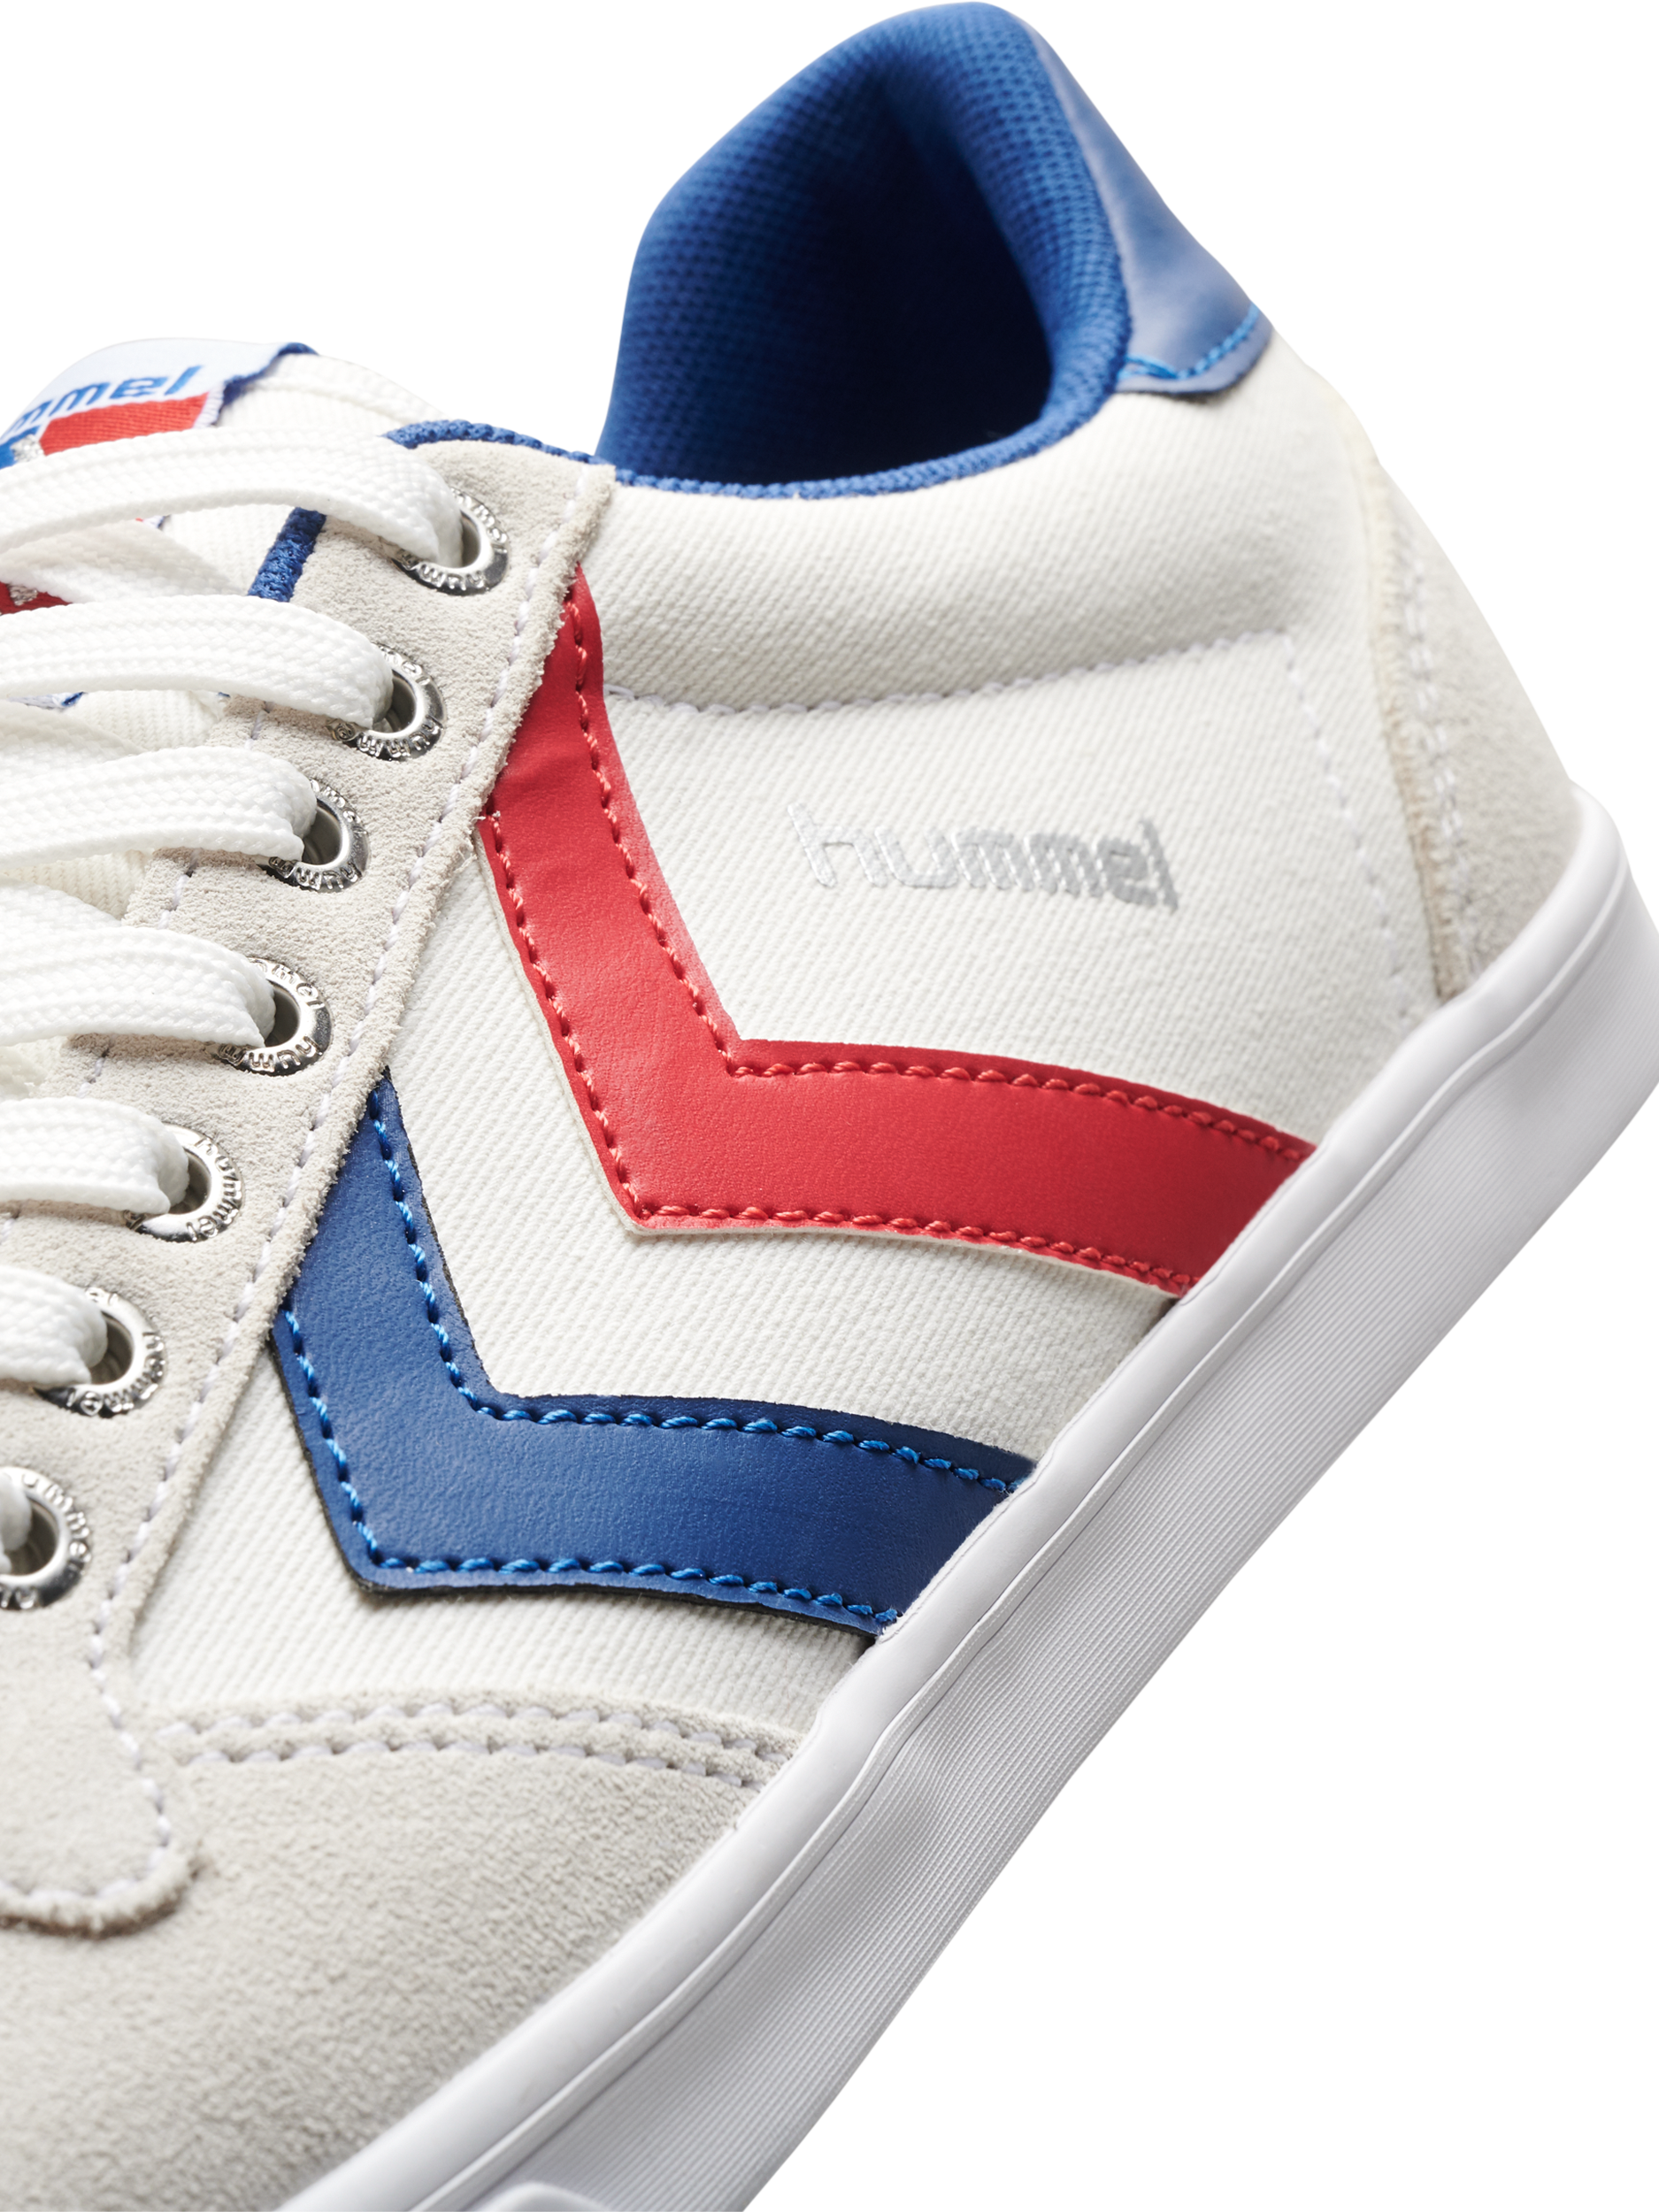 Hummel slimmer stadil Low top sneaker chaussures black blue red Gum 63-512-2640 